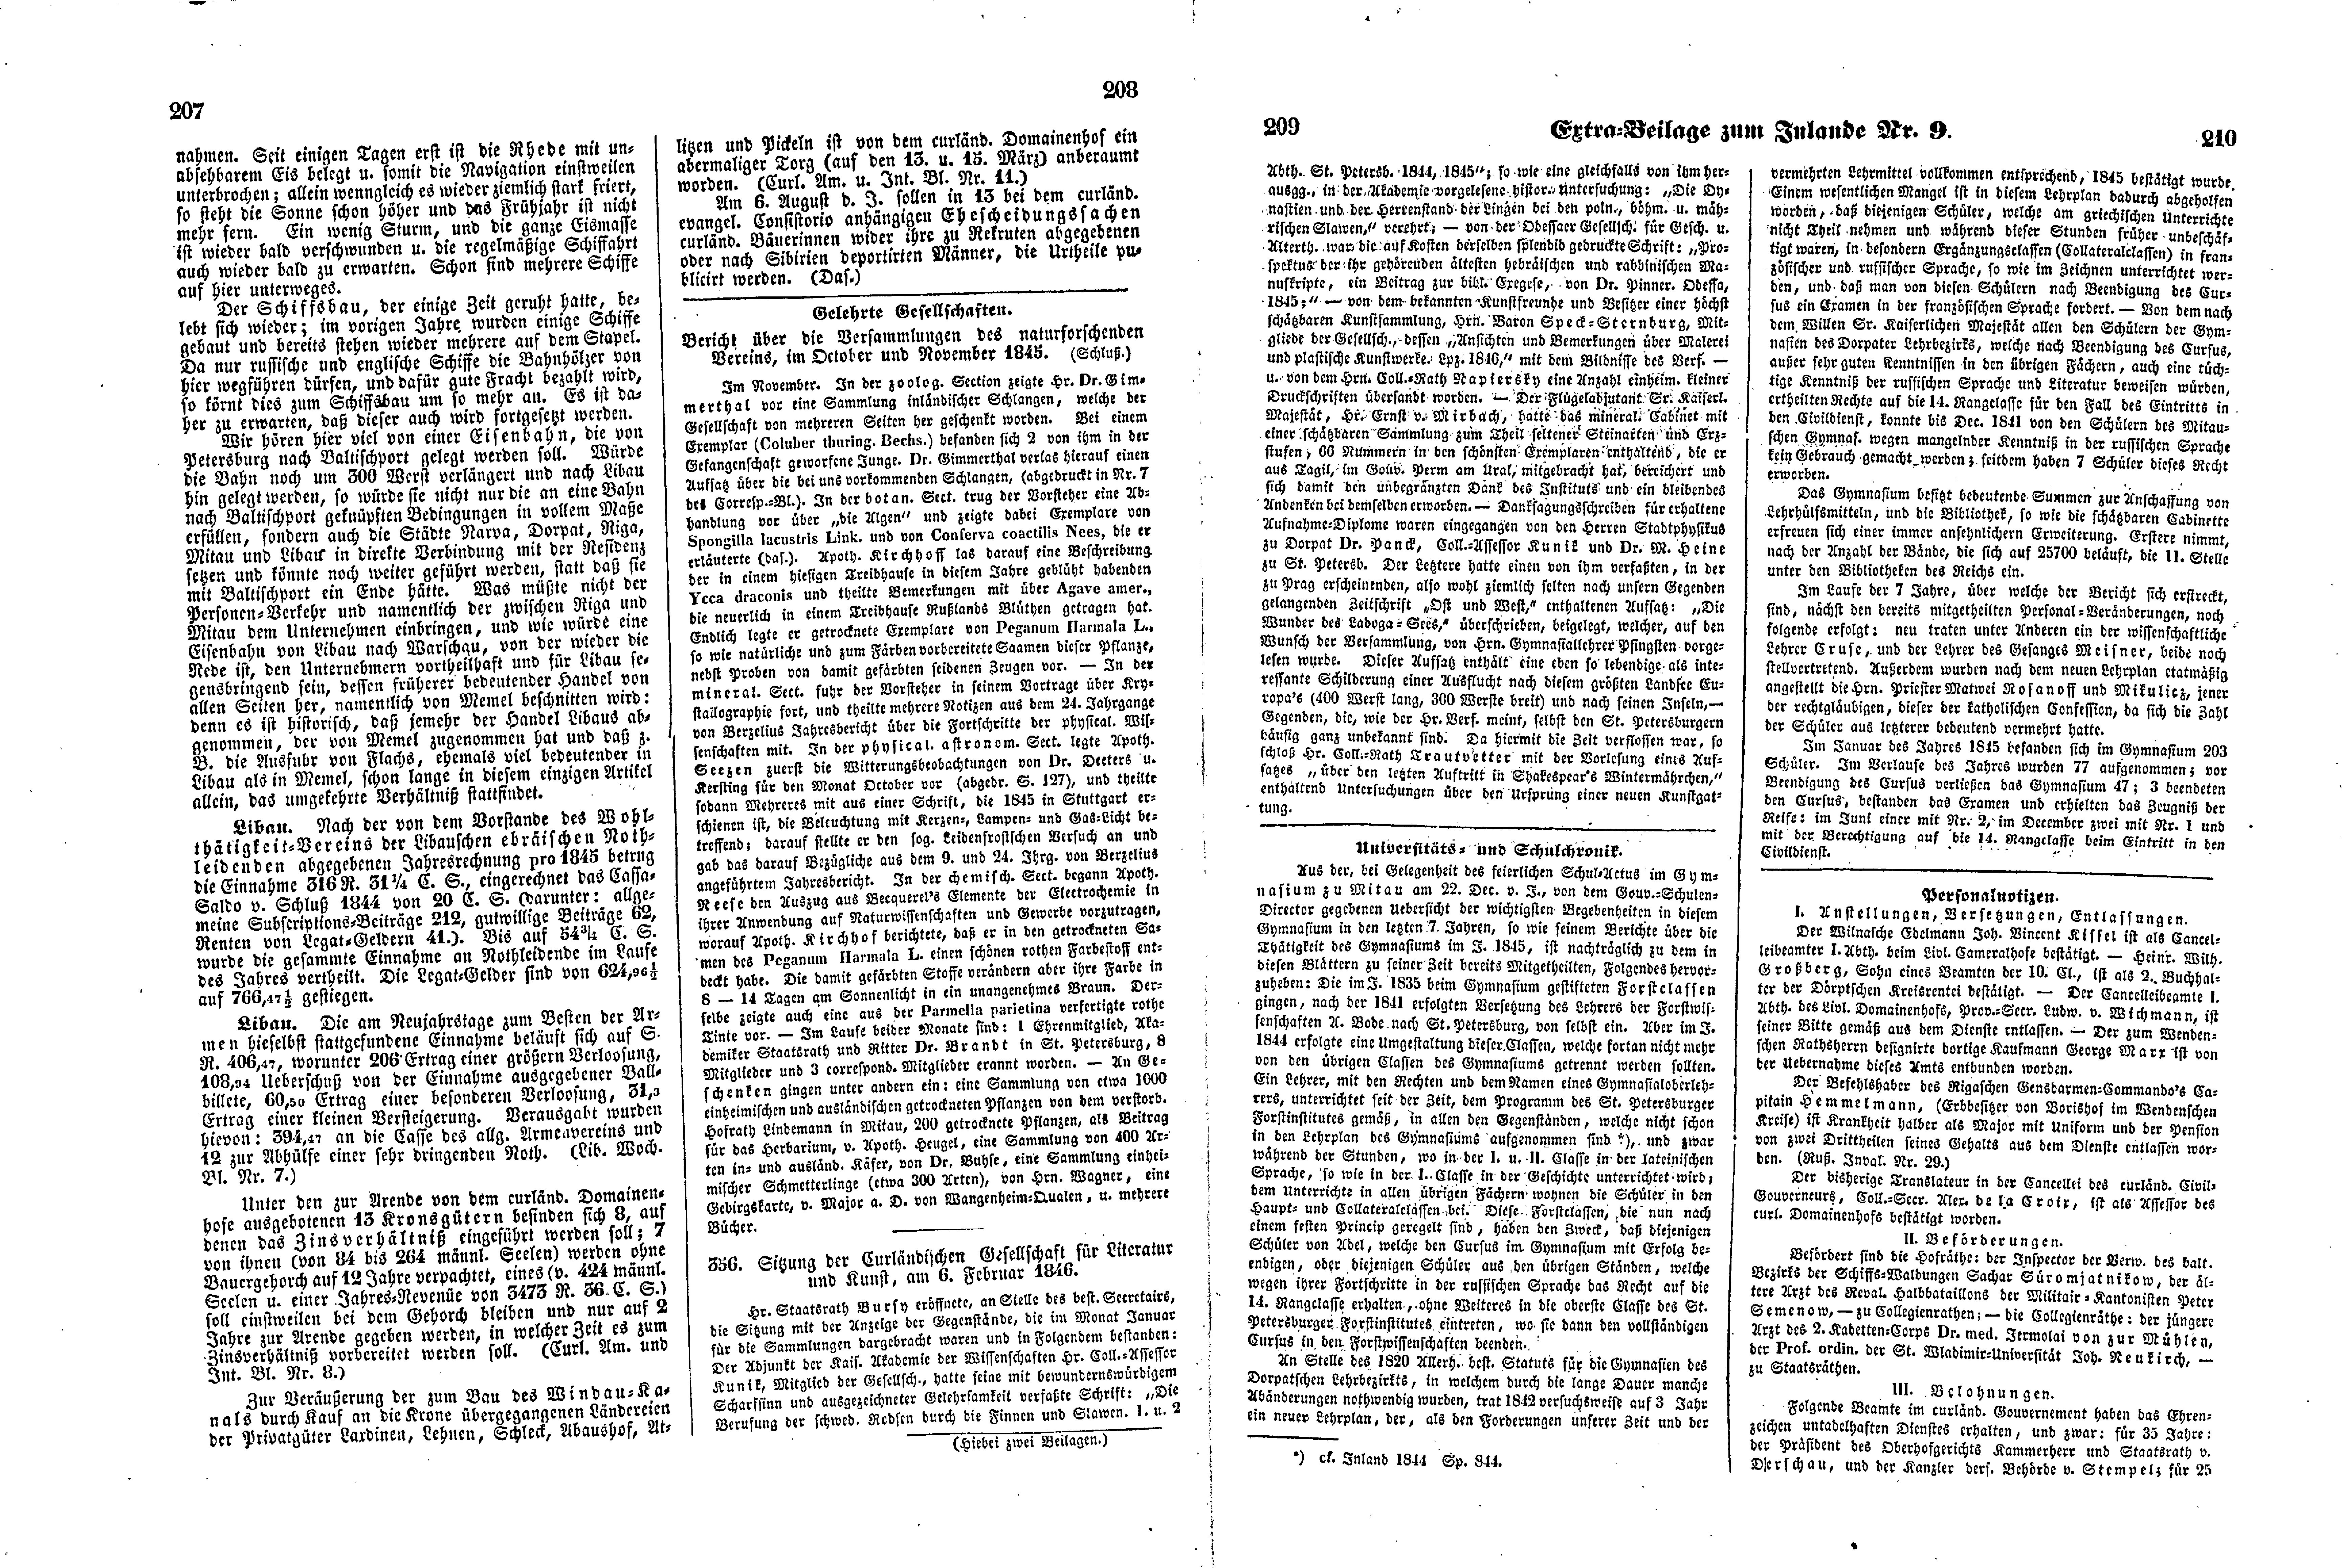 Das Inland [11] (1846) | 57. (207-210) Main body of text